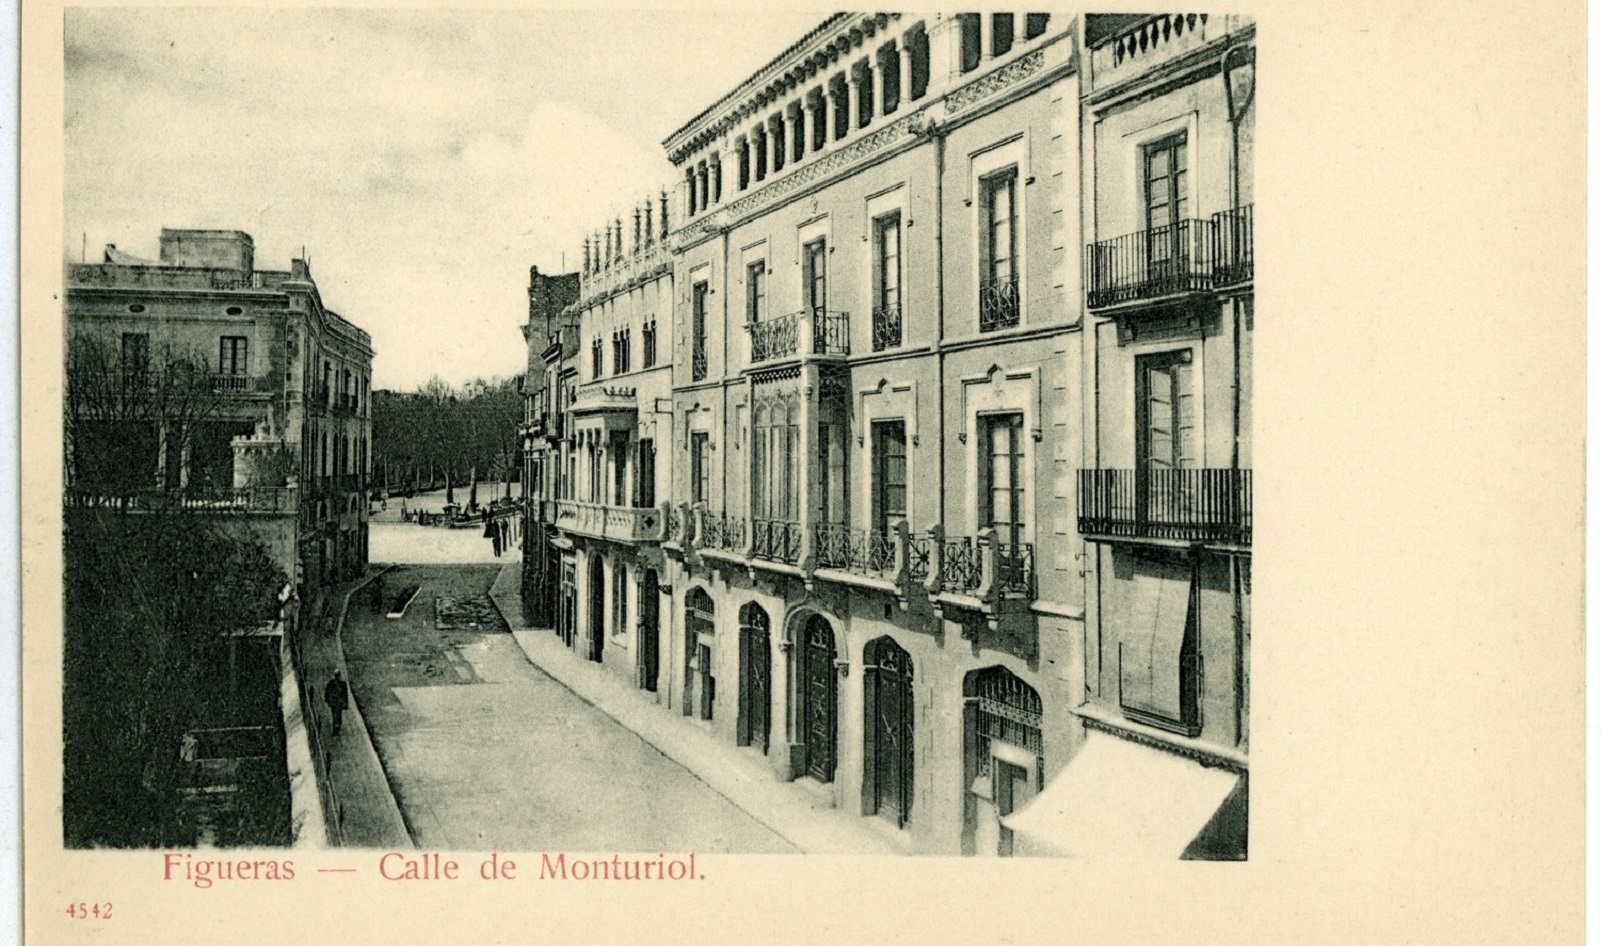 Улица Monturiol (Calle Monturiol)